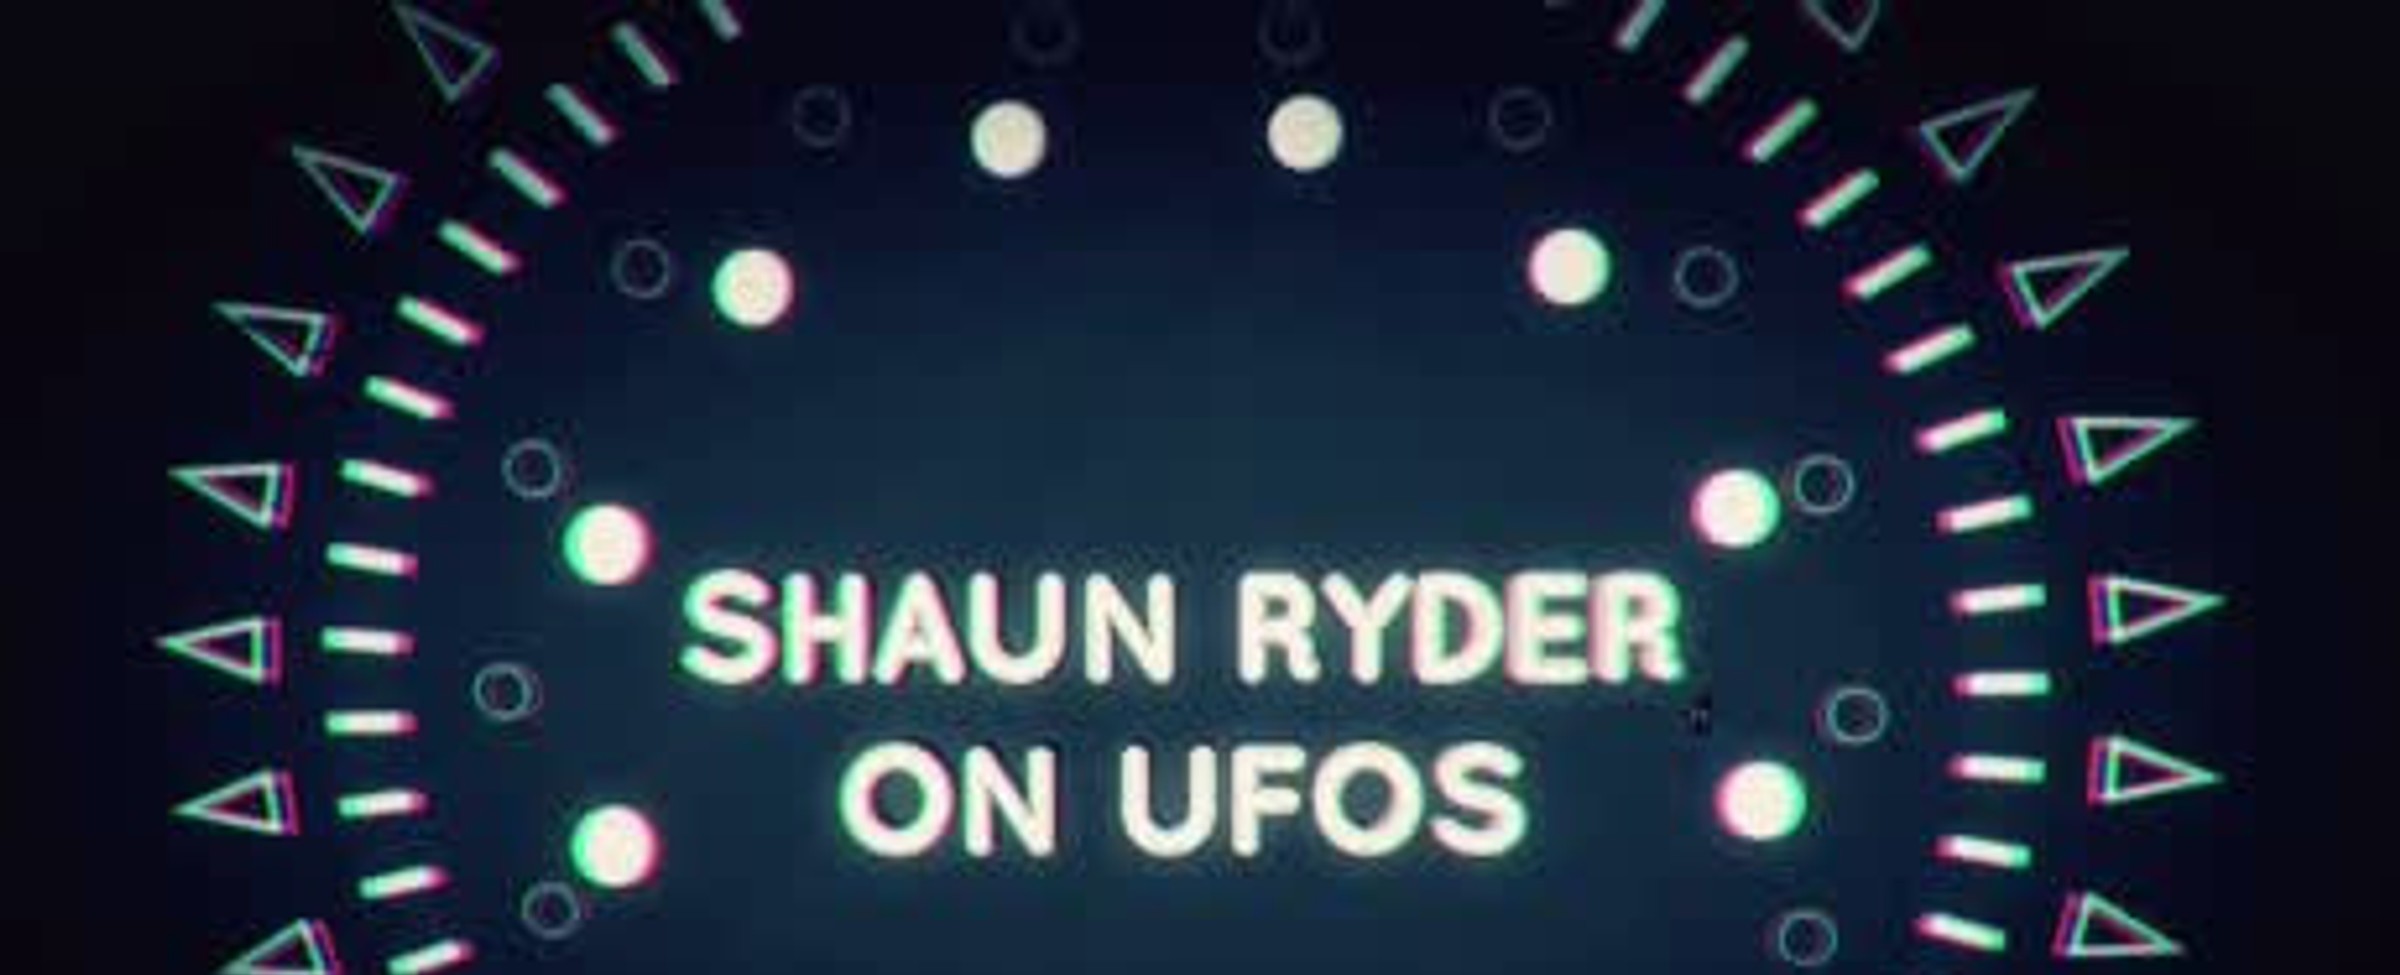 Shaun Ryder o UFO